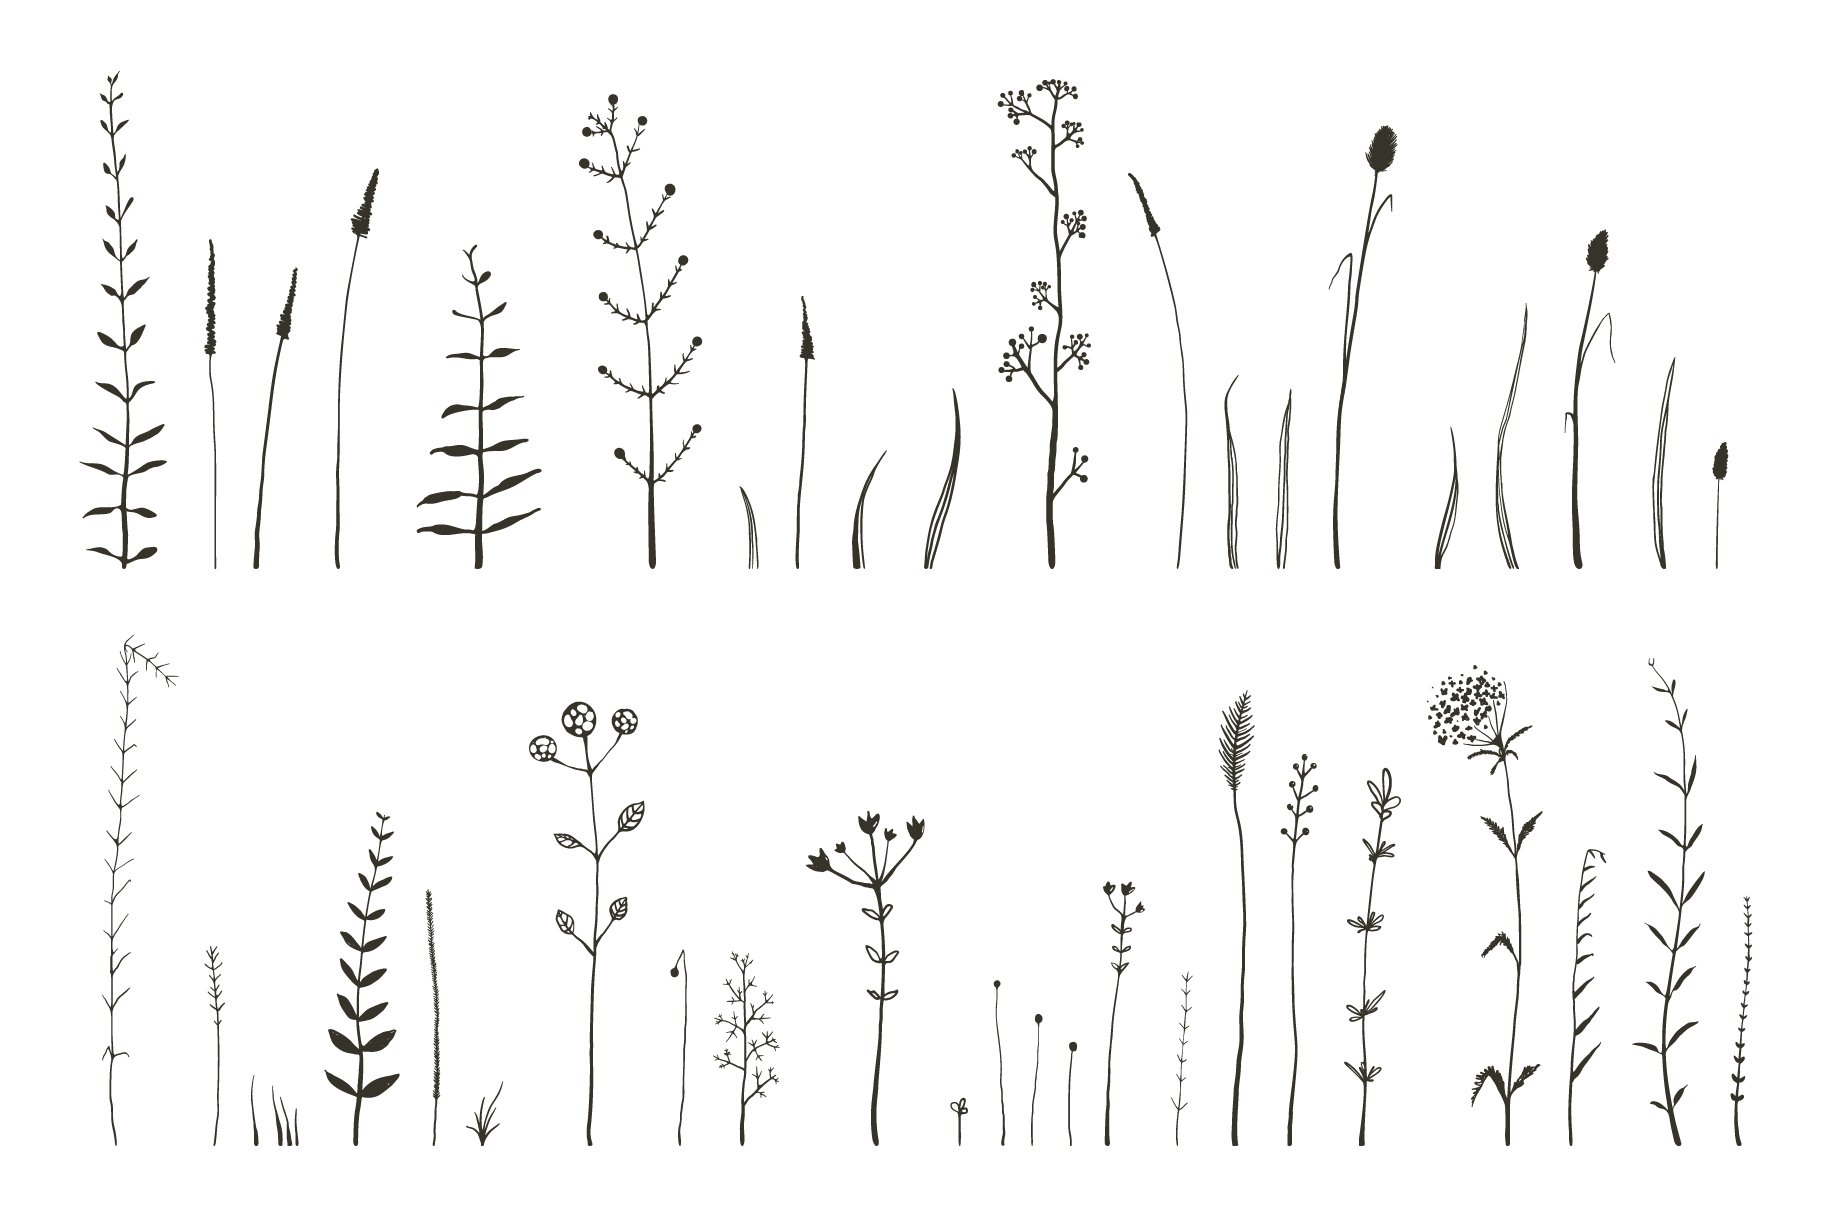 Wild Grass & Herbs vector Brushespreview image.